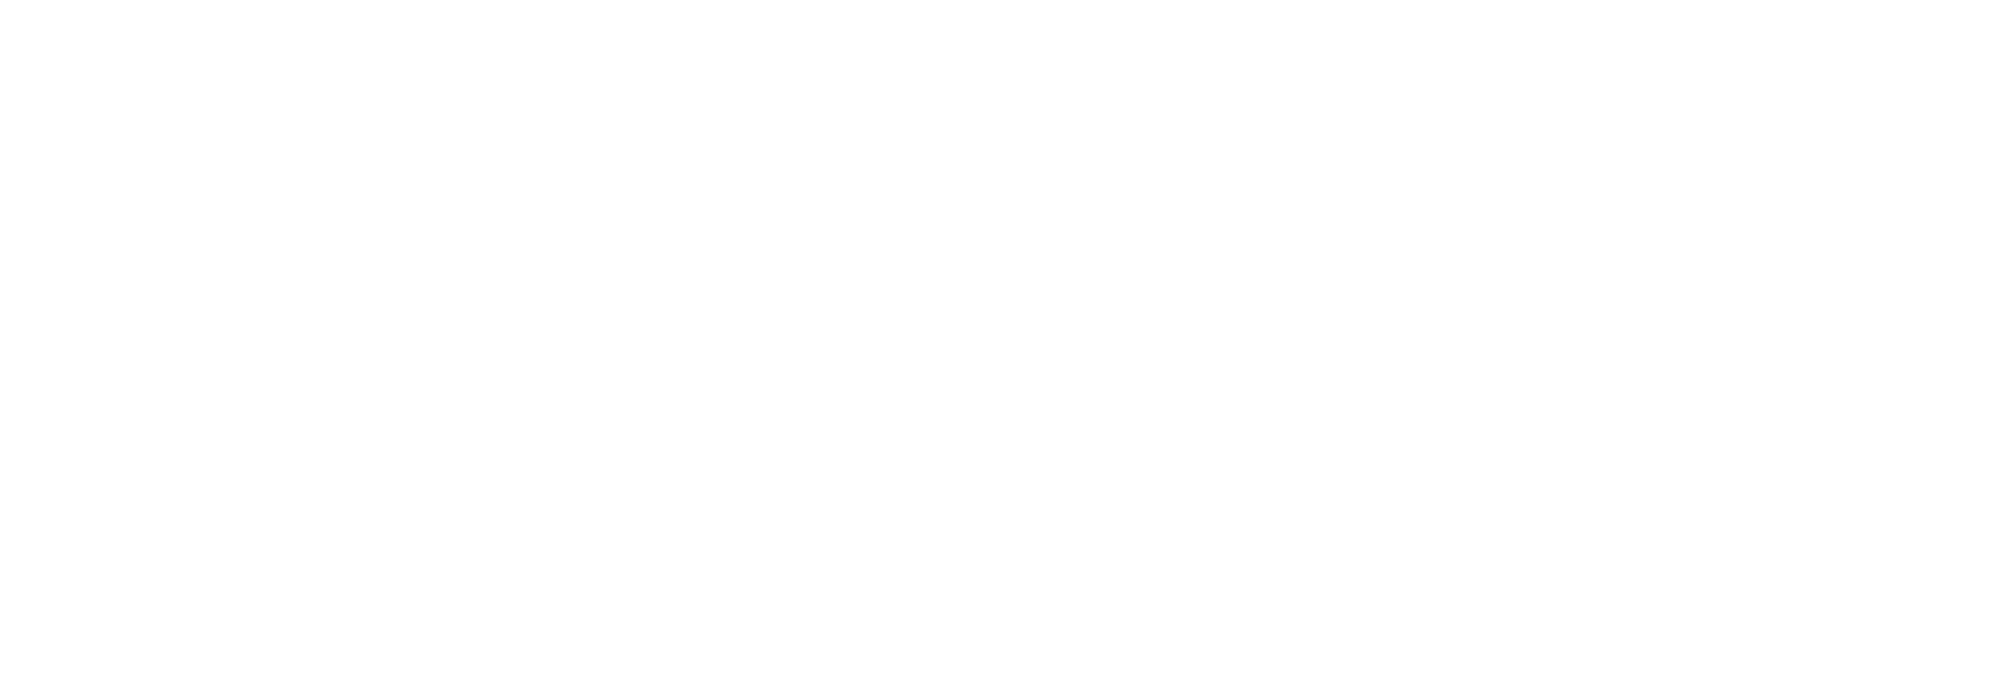 WFIRM Logo